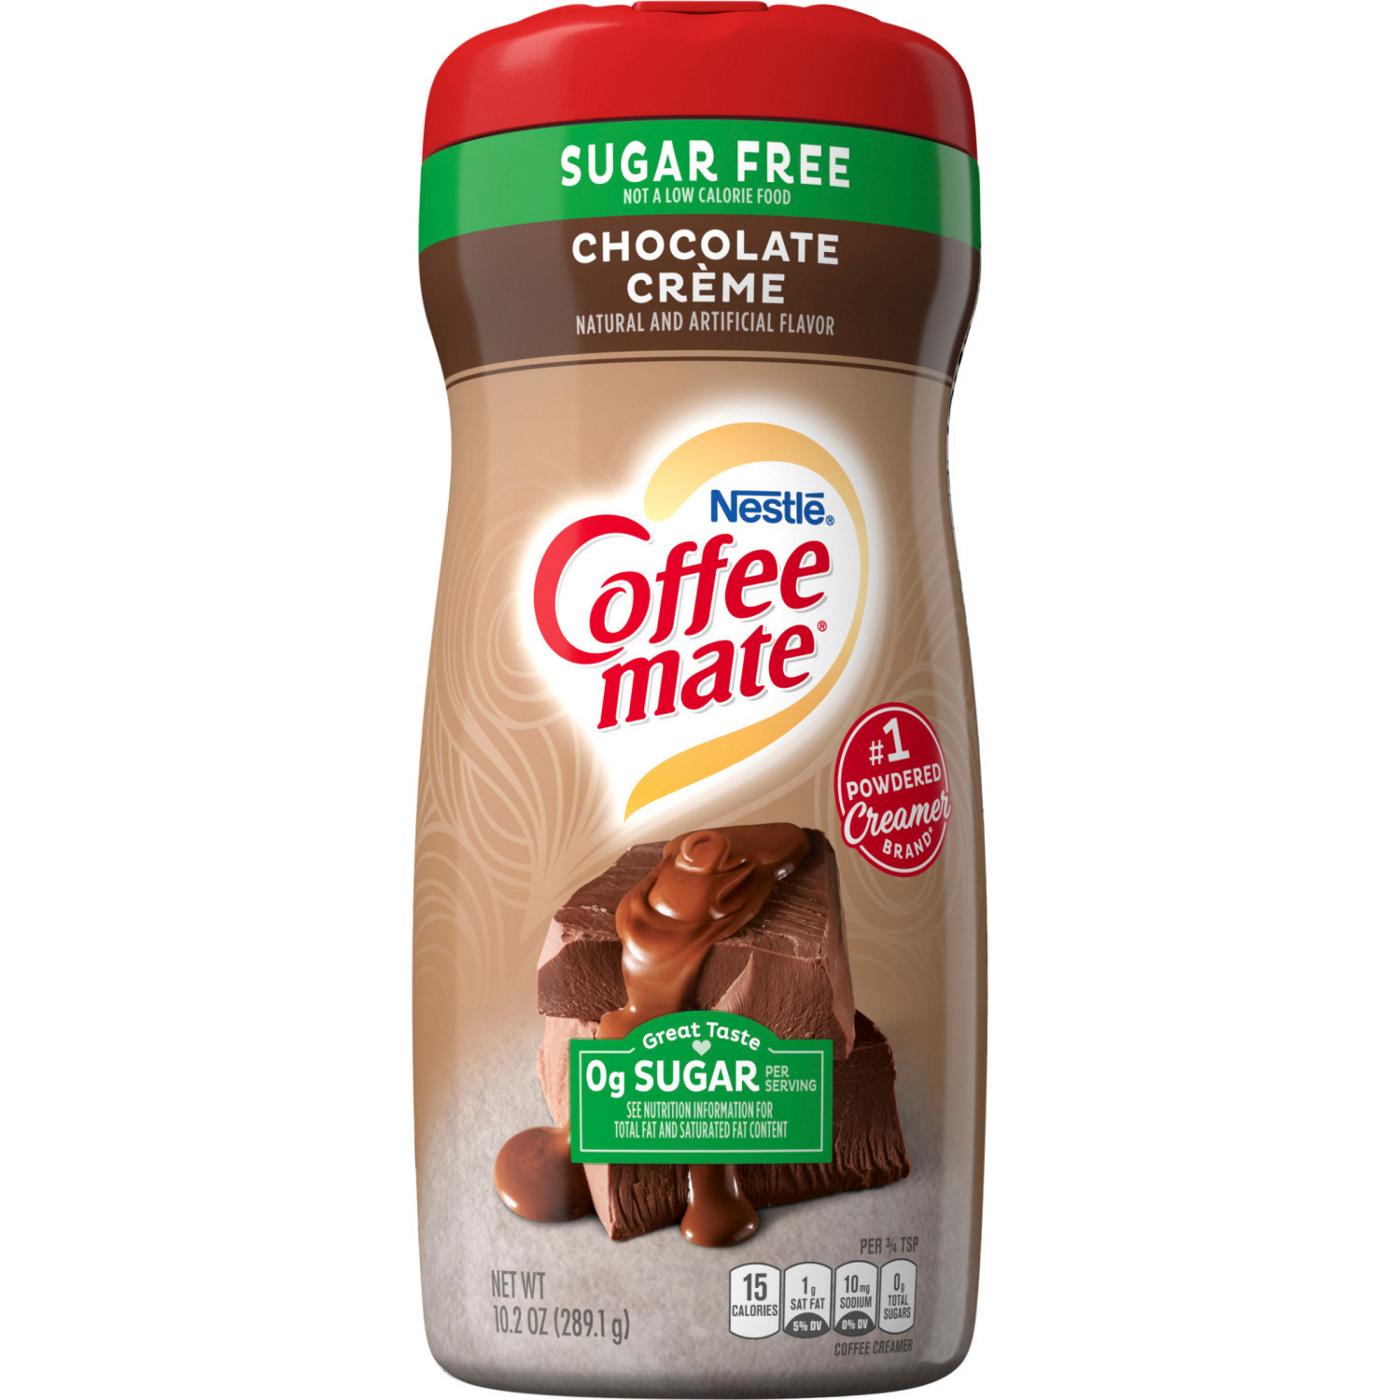 Nestle Coffee Mate Sugar Free Chocolate Creme Powder Coffee Creamer; image 1 of 2